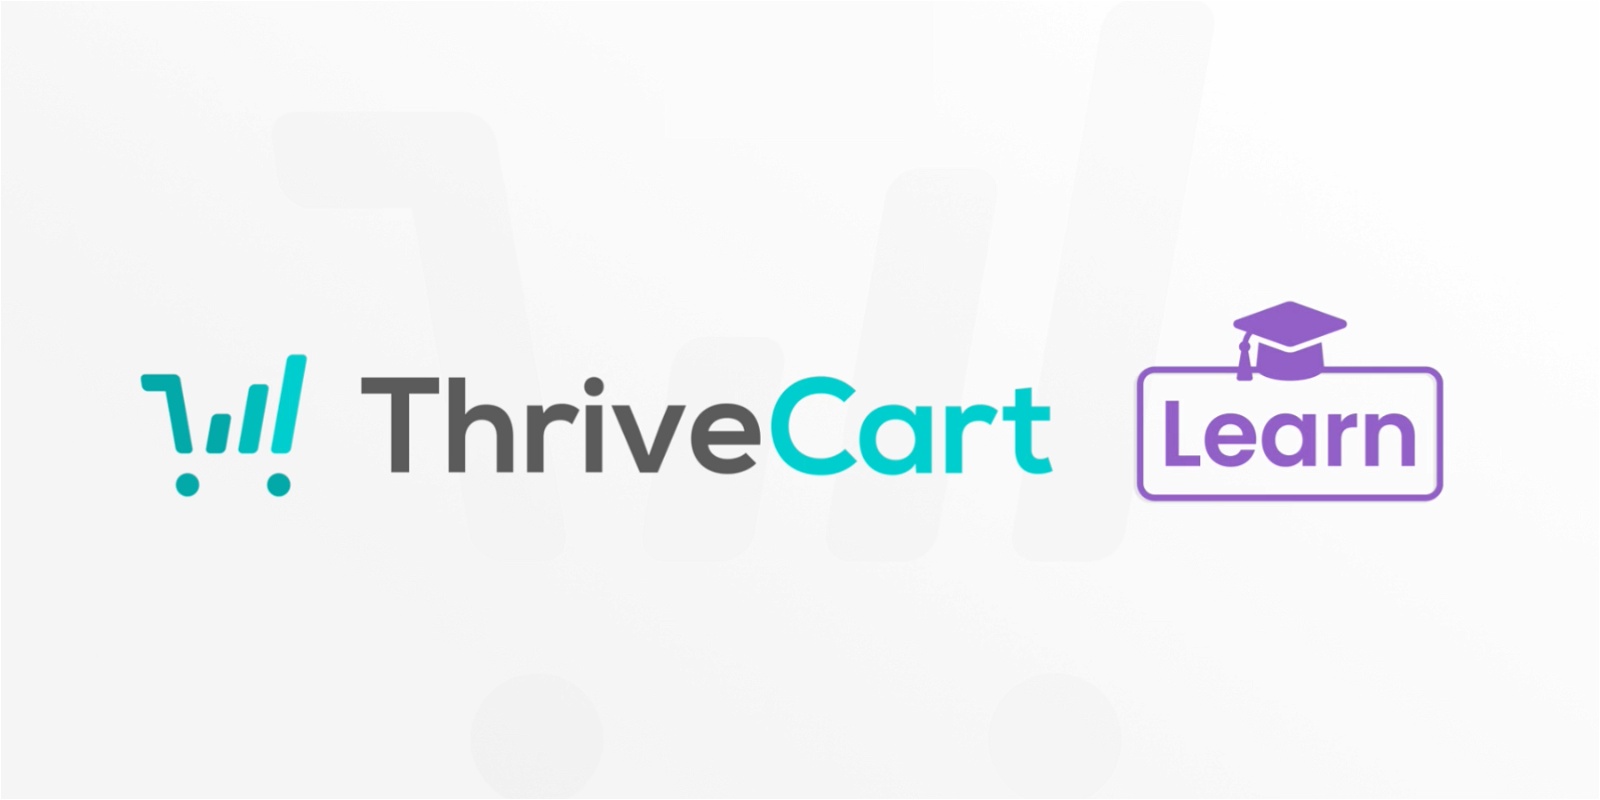 ThriveCart Learn